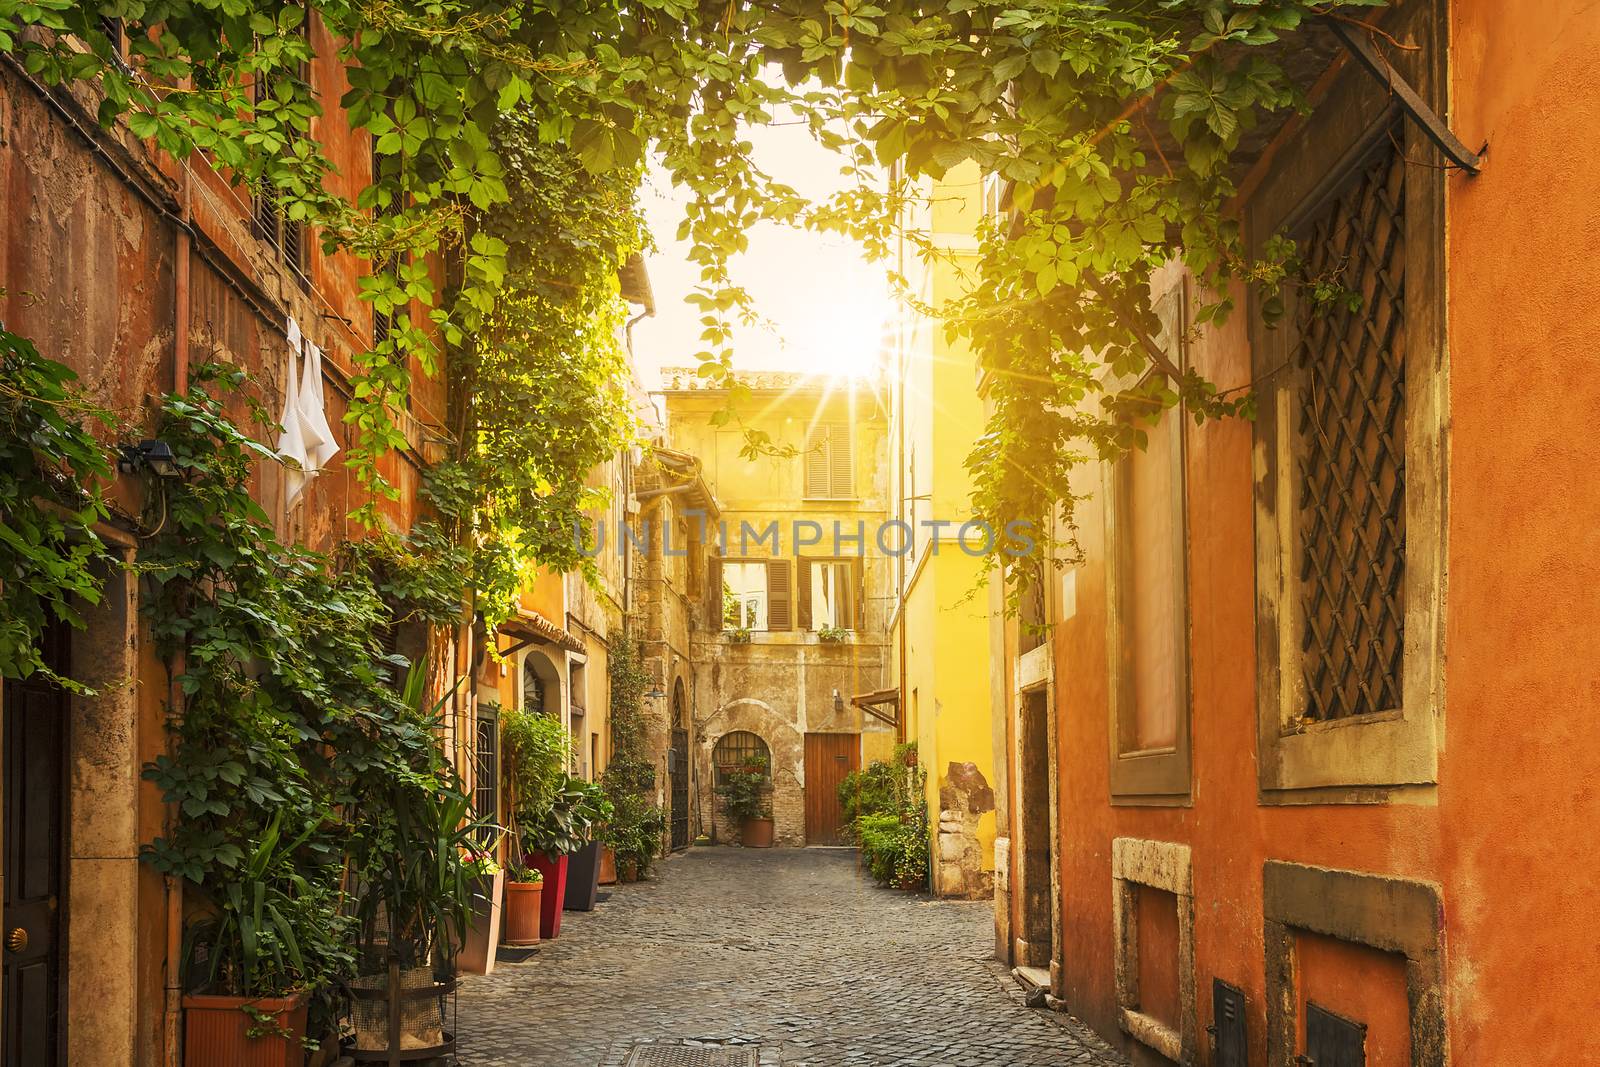 Old street in Trastevere in Rome by vwalakte